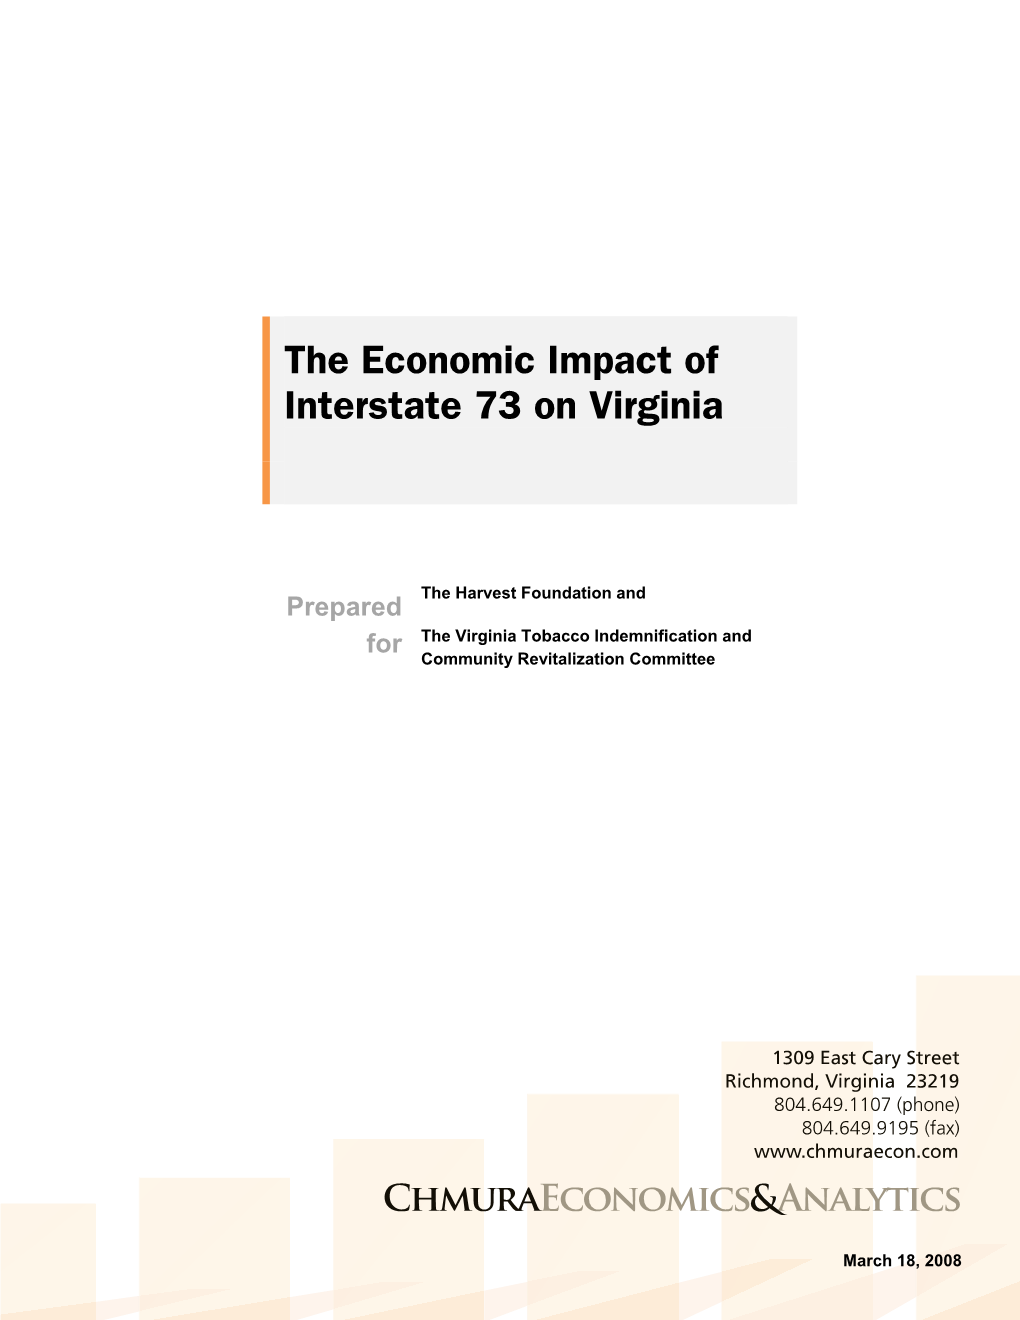 The Economic Impact of Interstate 73 on Virginia